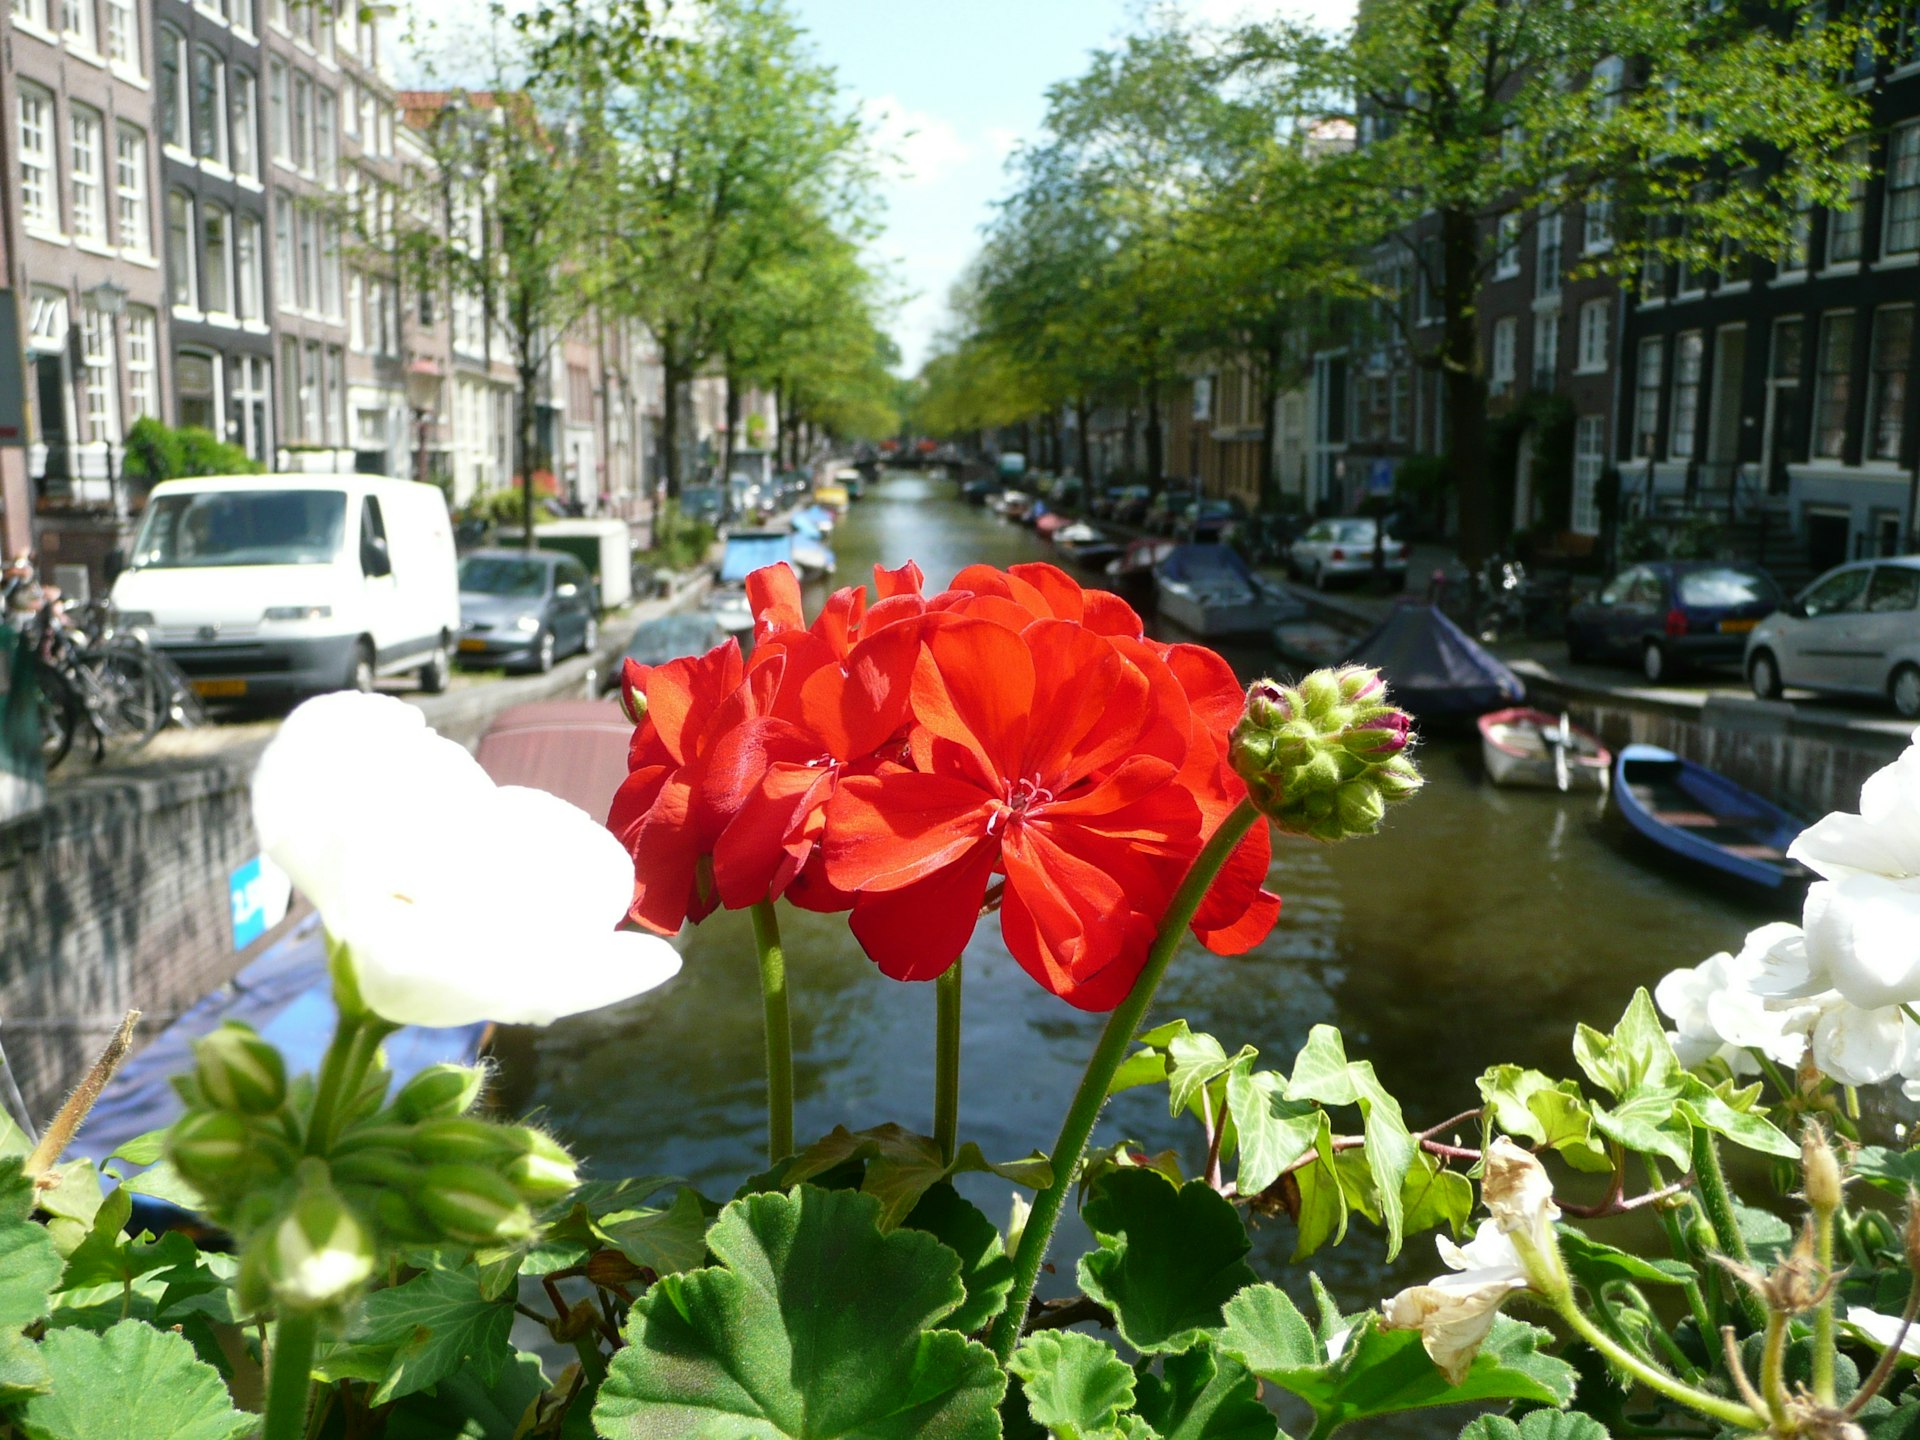 Flowers in a street in Amsterdam